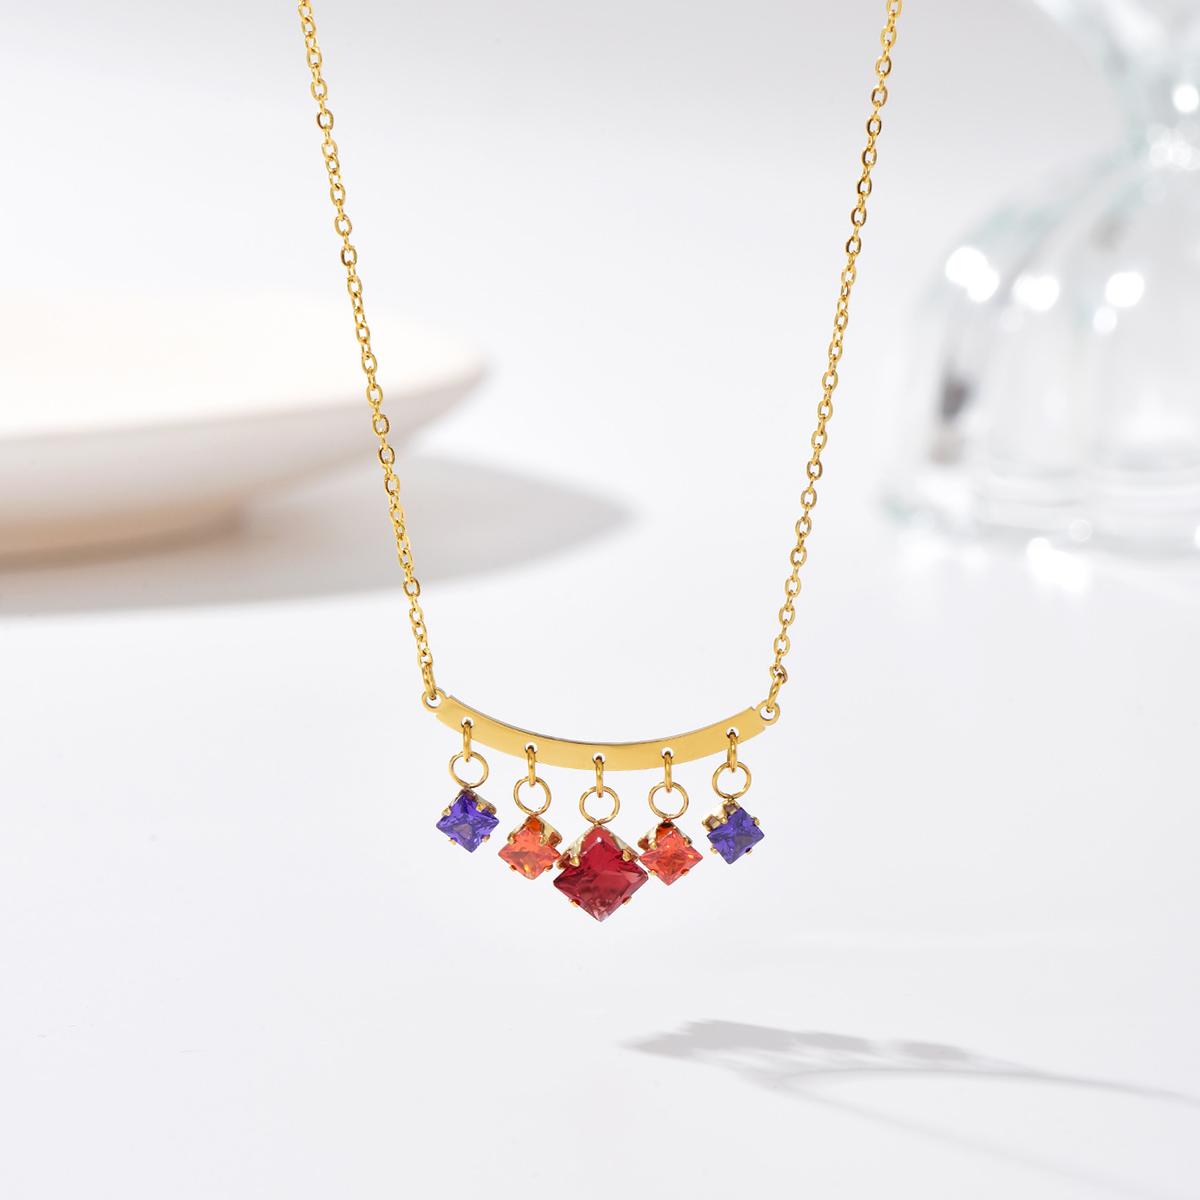 Fashion simple colored diamond pendant necklace